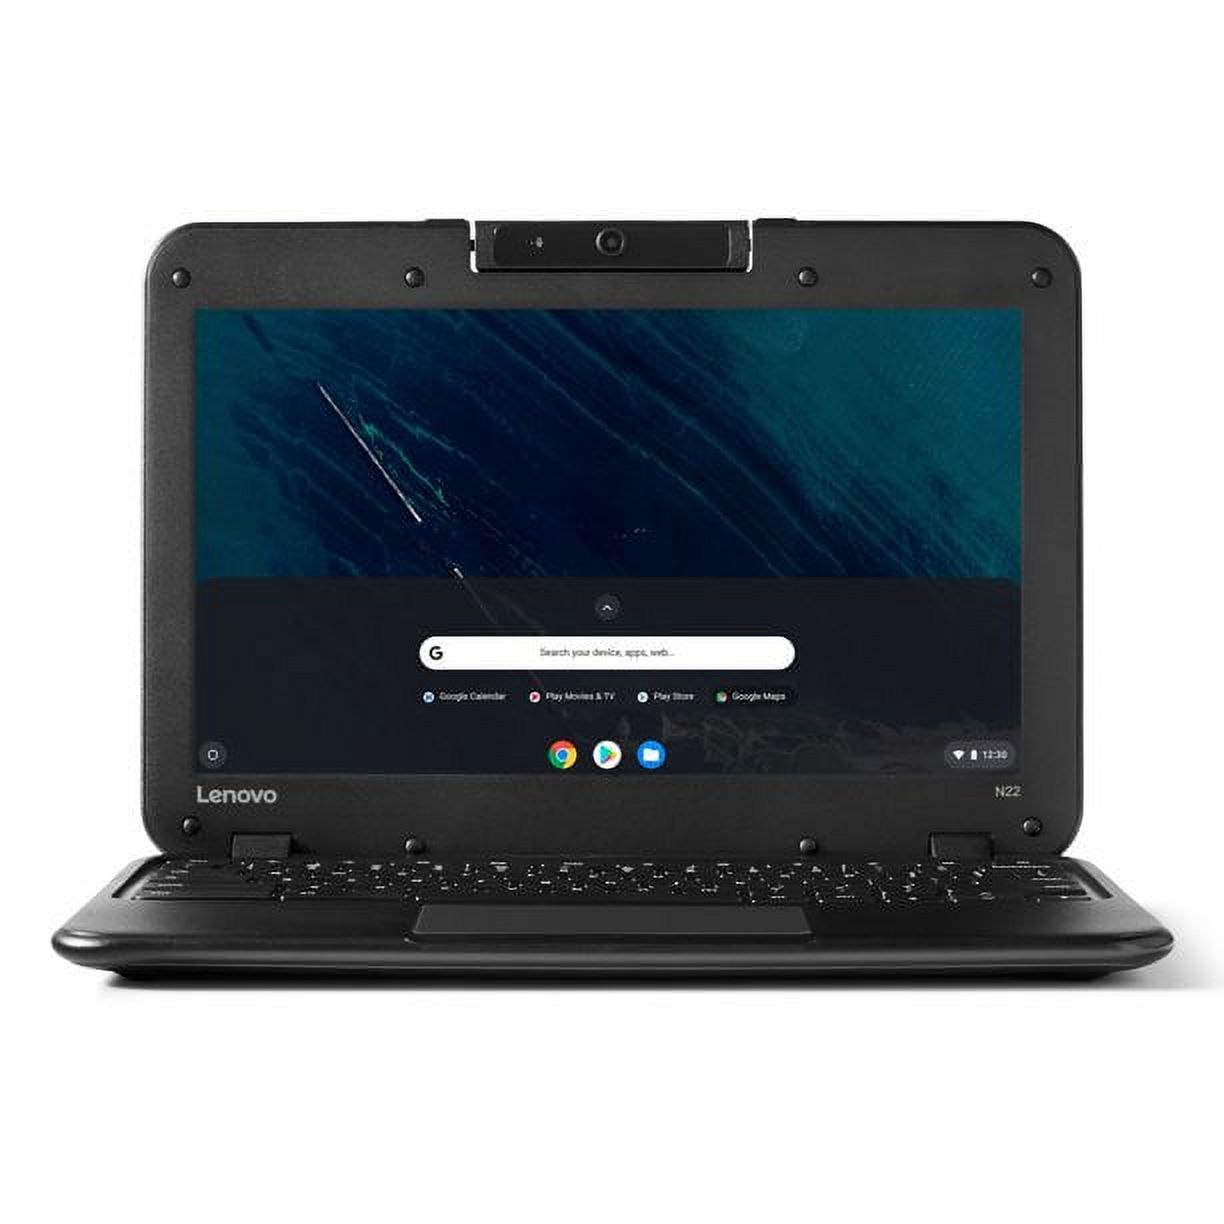 Lenovo N22 Chromebook 11.6" Laptop, Intel Celeron, 2GB RAM, 16GB SSD, Chrome OS, Black (USED) - image 1 of 4